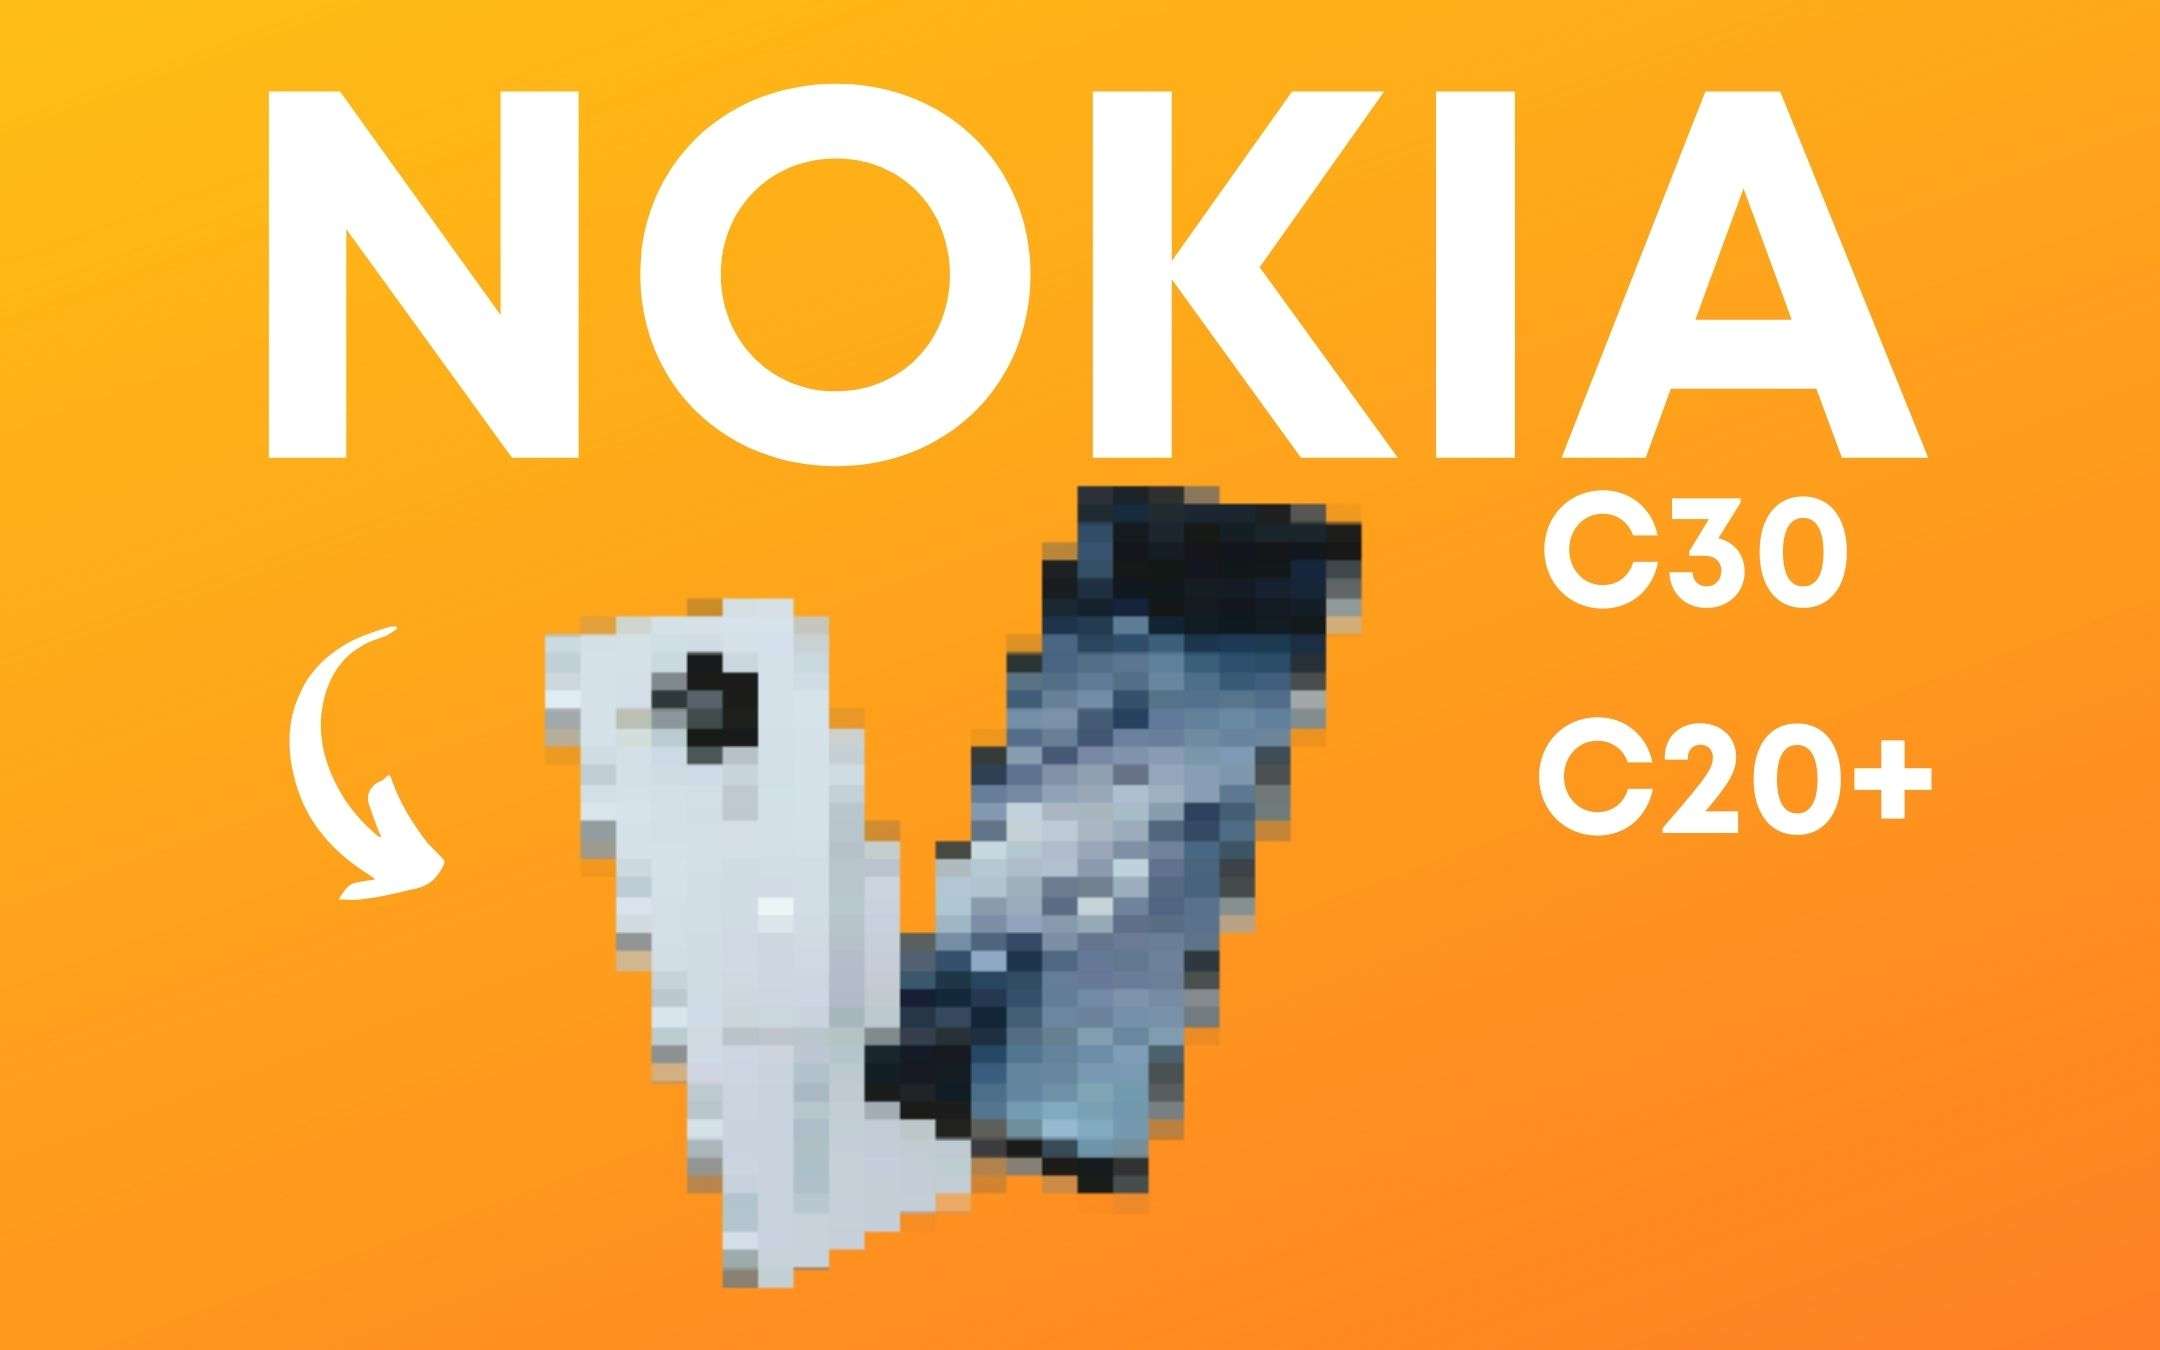 Nokia C20 Plus e C30: avranno batterie TOP